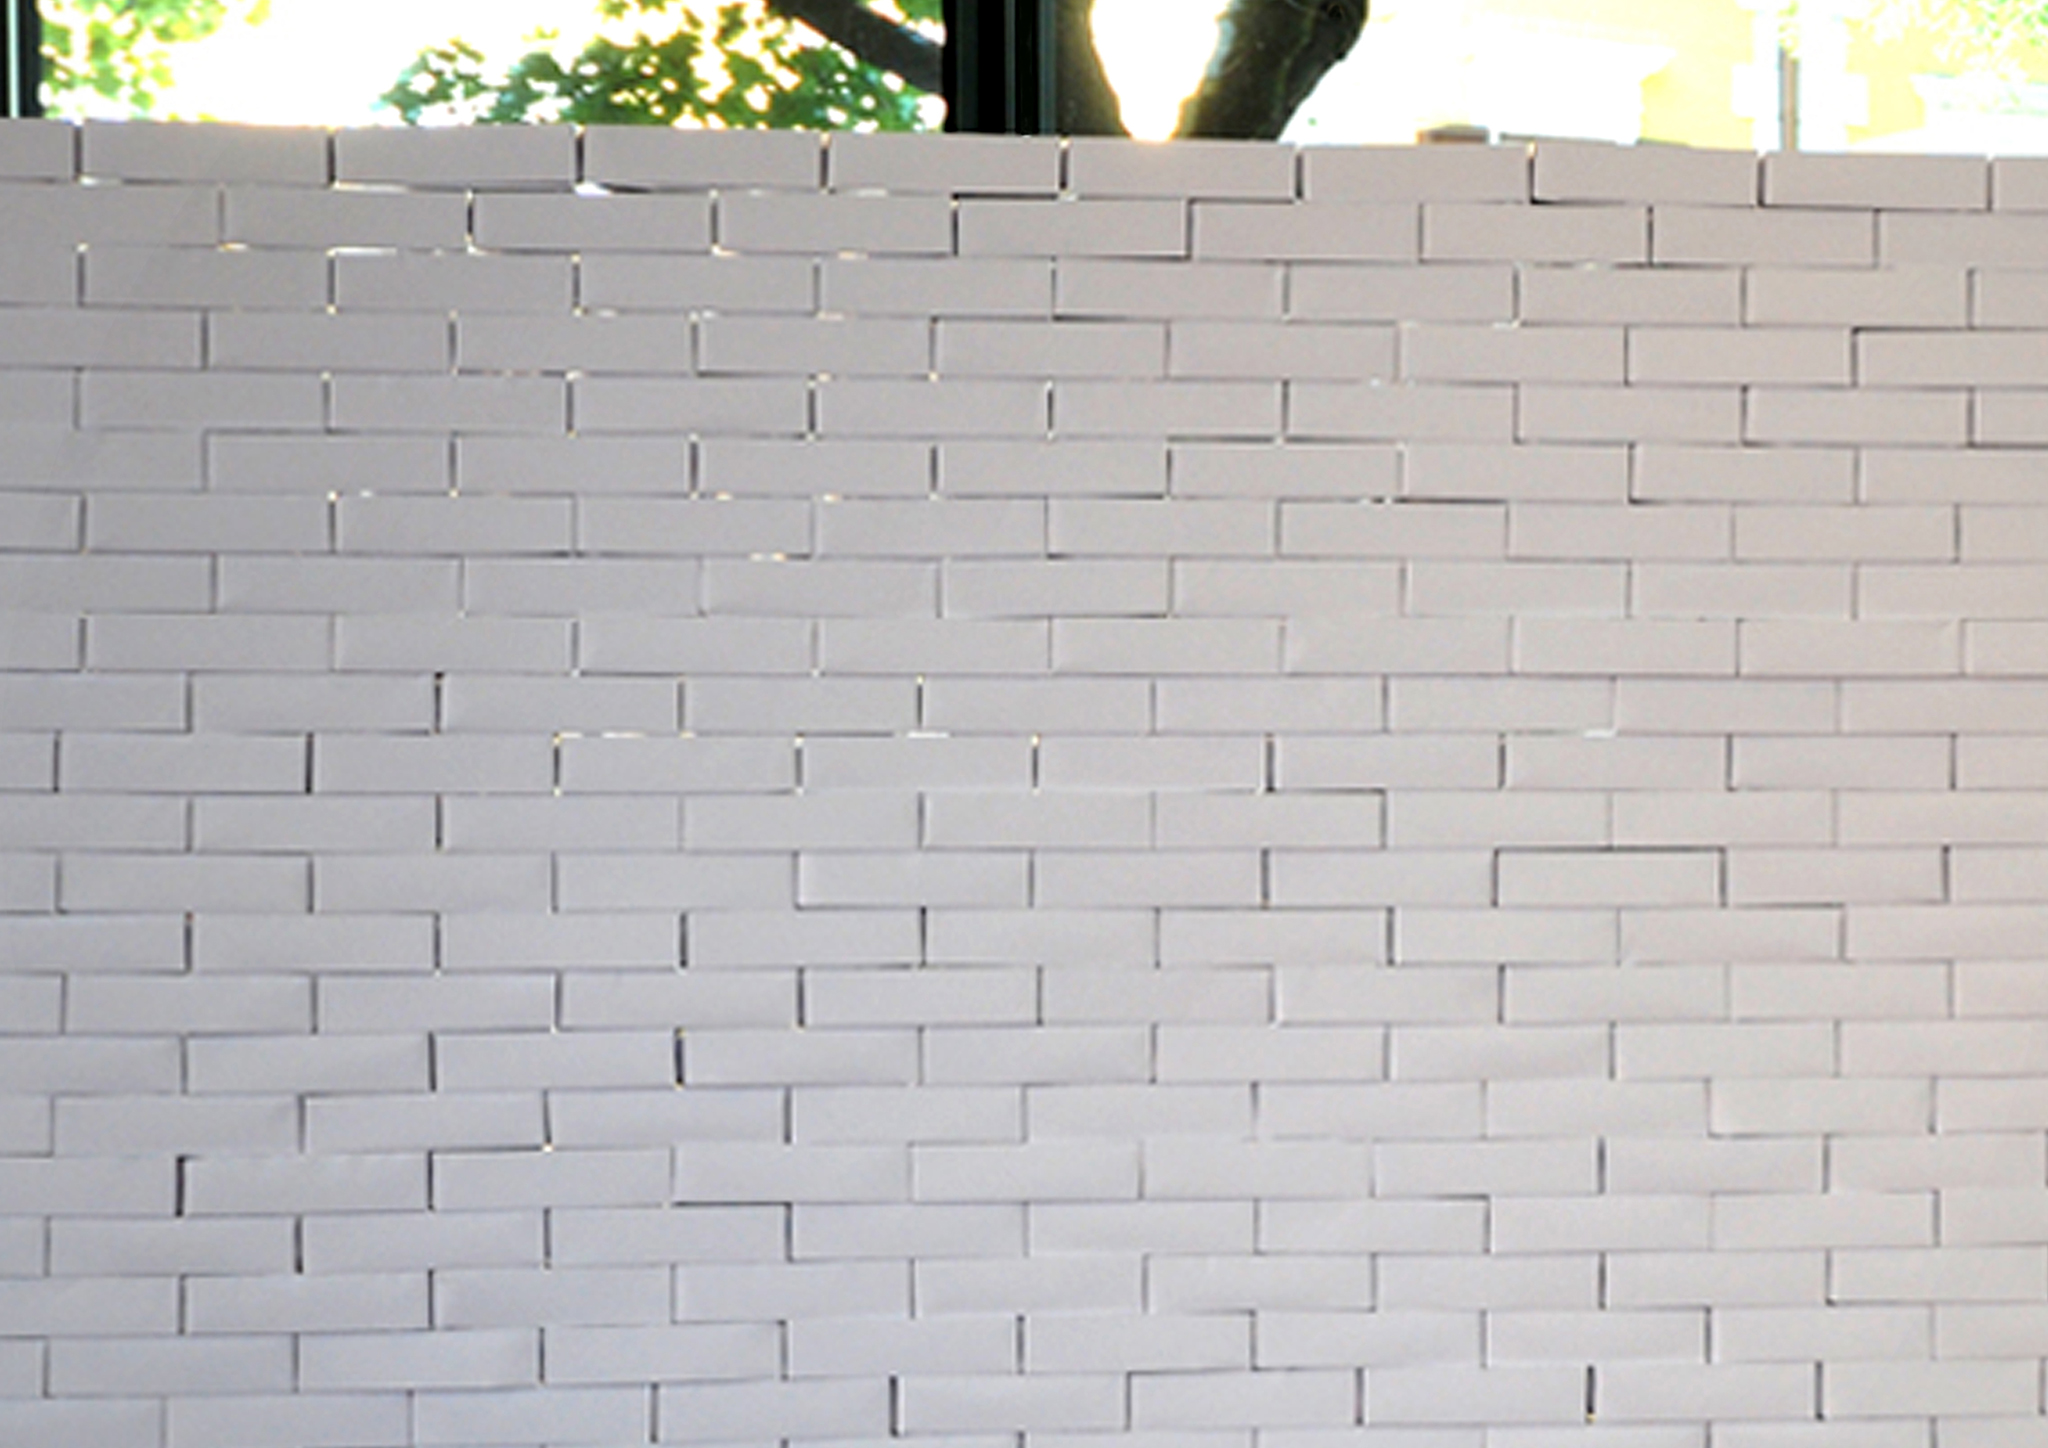 PAPER RELIGIONS  # THE WALL, 533 origami bricks, 533 sheets of paper, 8 days of work, 12 collaborators, 320 x 186 cm. Manifesta7 Parallel event, Festival “Città al muro”, University of Economics of Trento, 2008